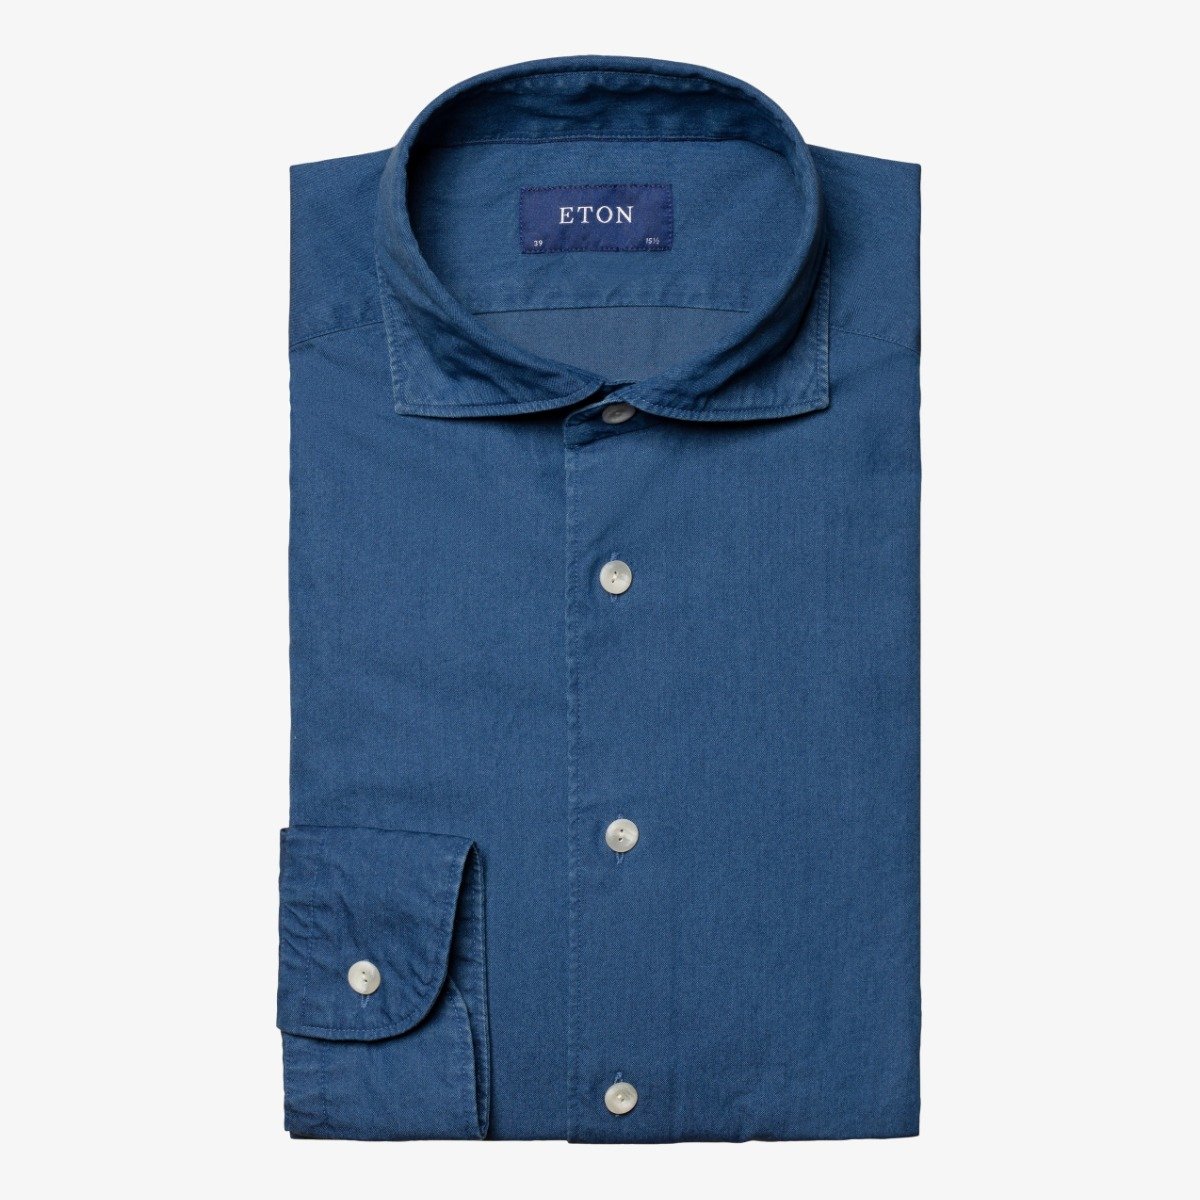 Eton navy slim fit lightweight denim men's casual shirt